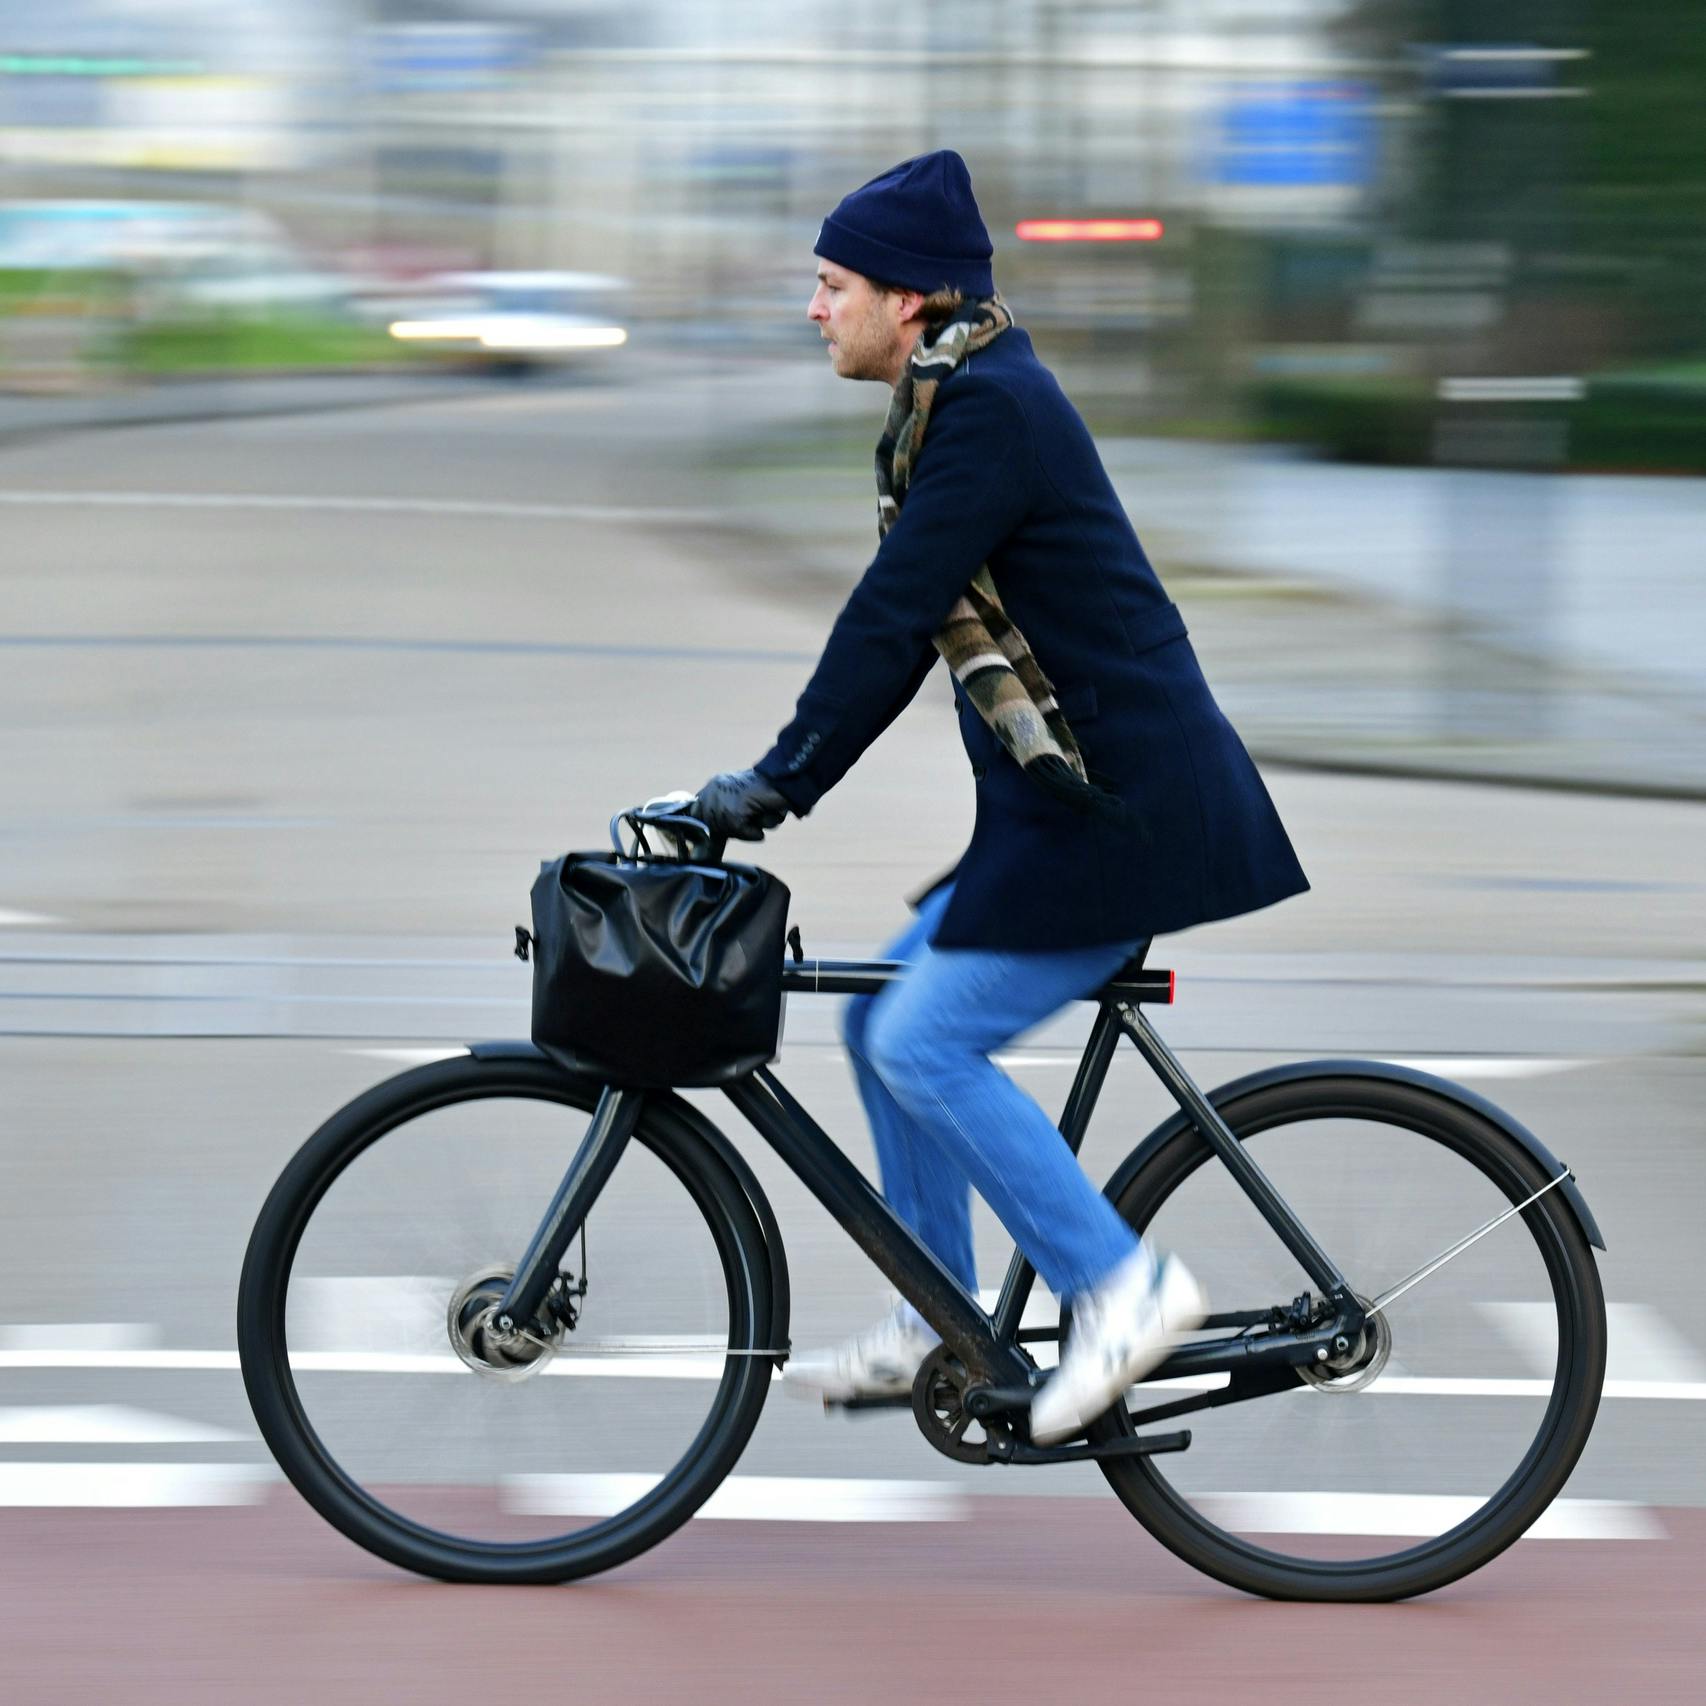 Invoering maximumsnelheid voor fietsen blijkt lastig